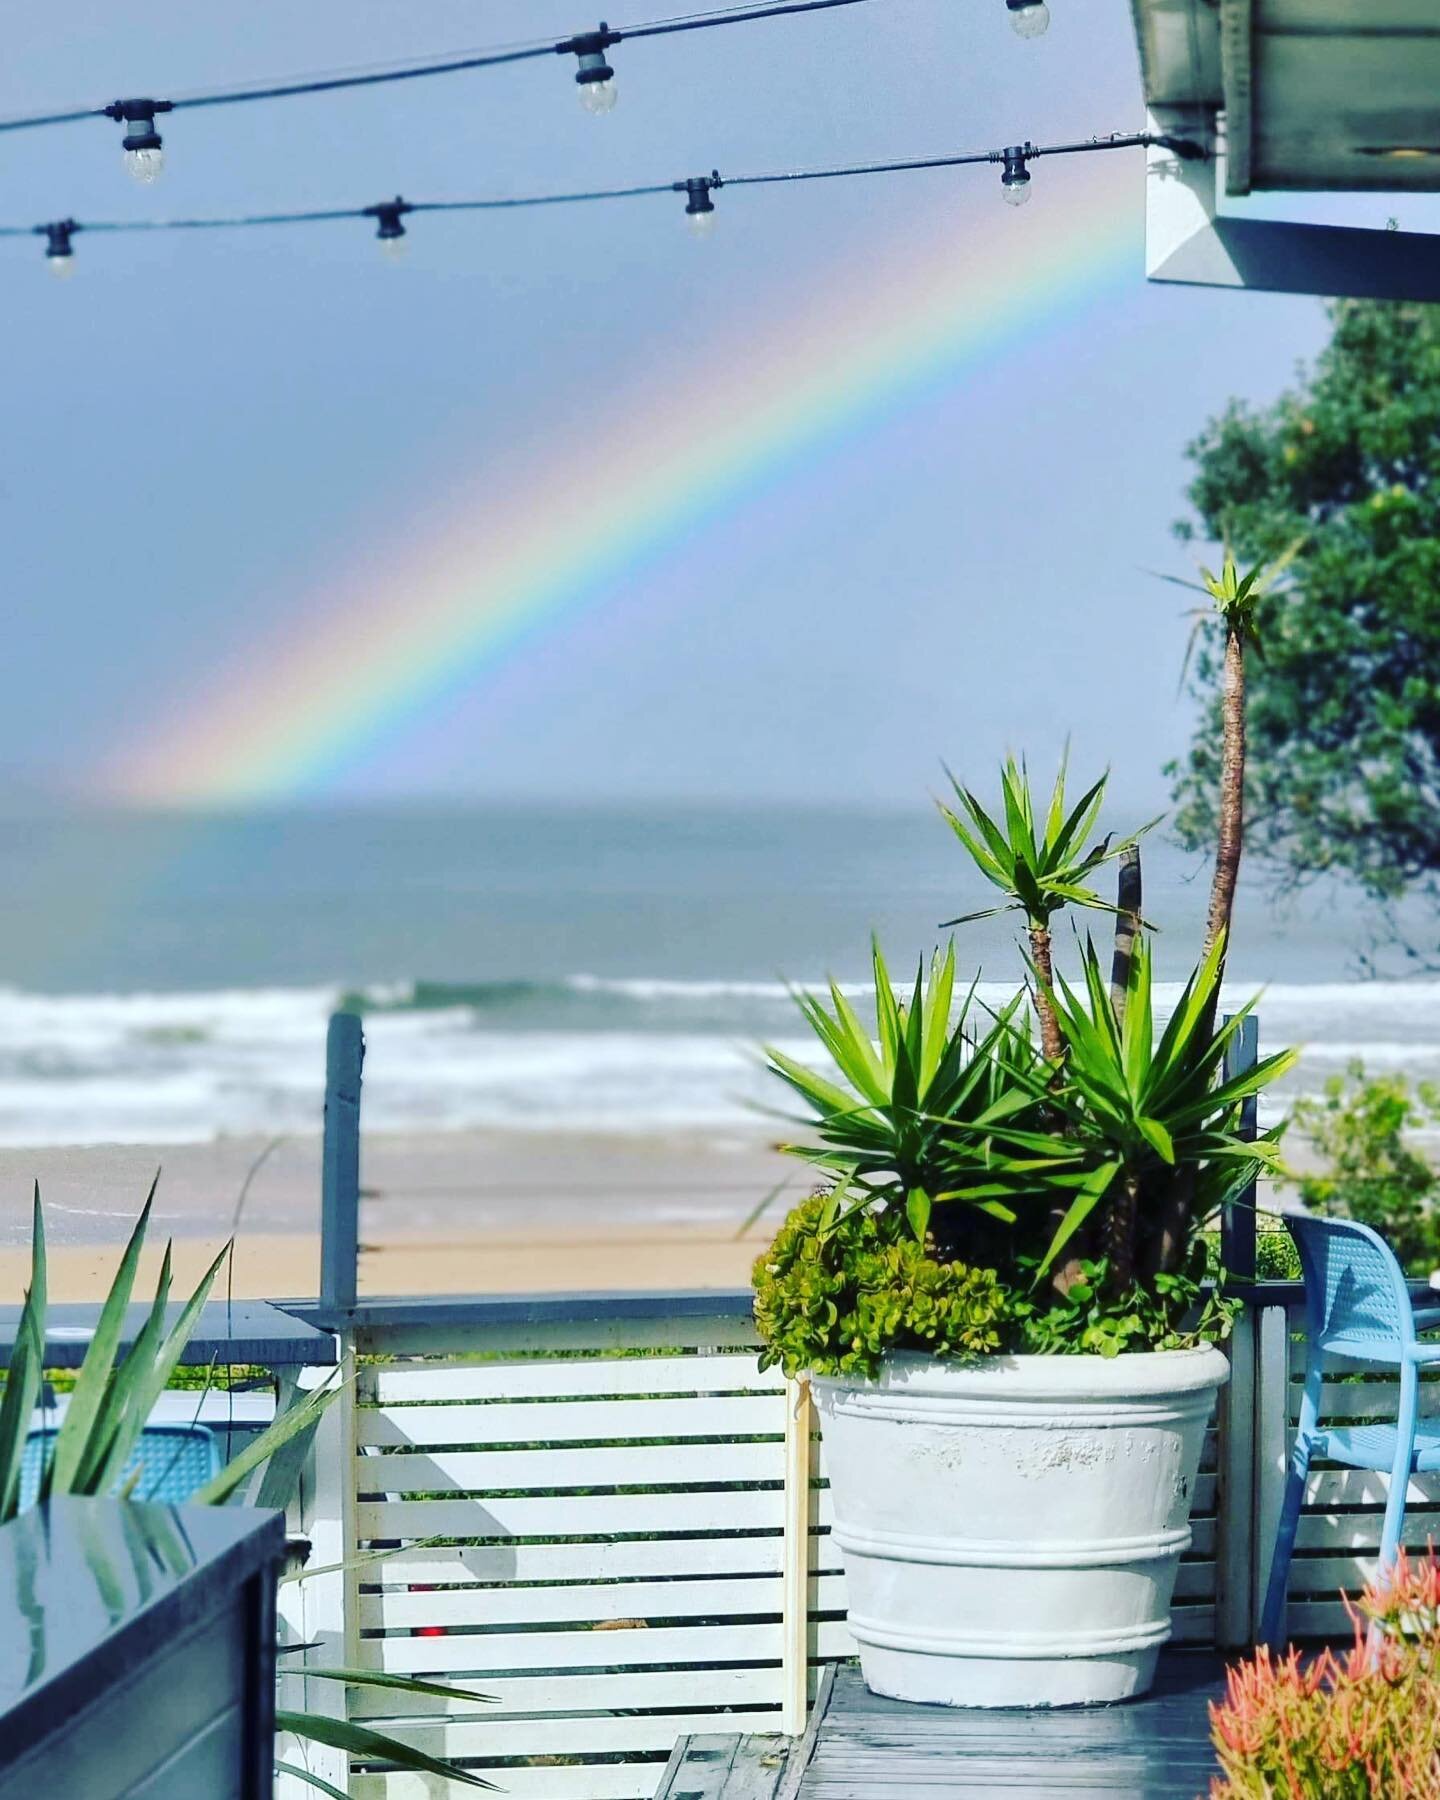 HAPPY SATURDAY! Even when it rains, you can&rsquo;t beat this view!
.
.
.
#margaritadaze #uminabeach #loveumina #rainbow #beachbar #casualdining